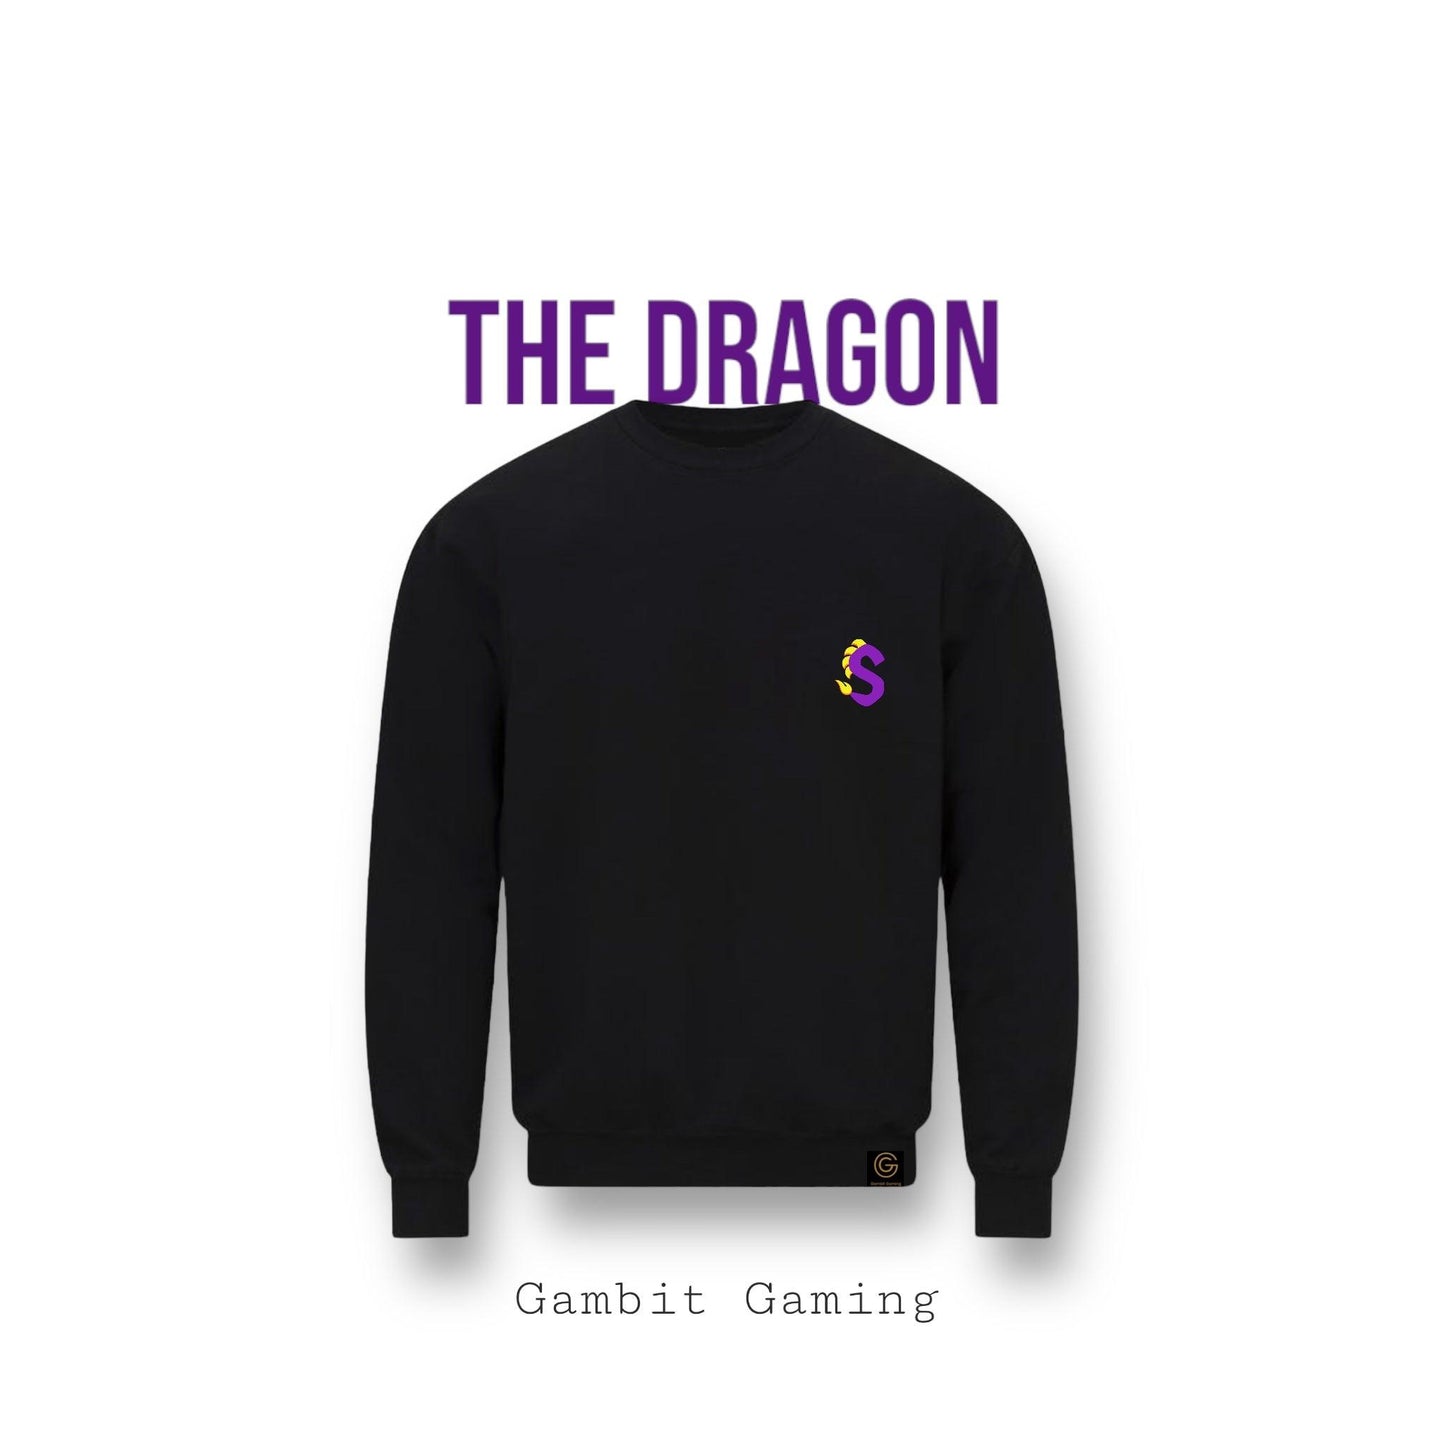 The Dragon Sweater - Gambit Gaming